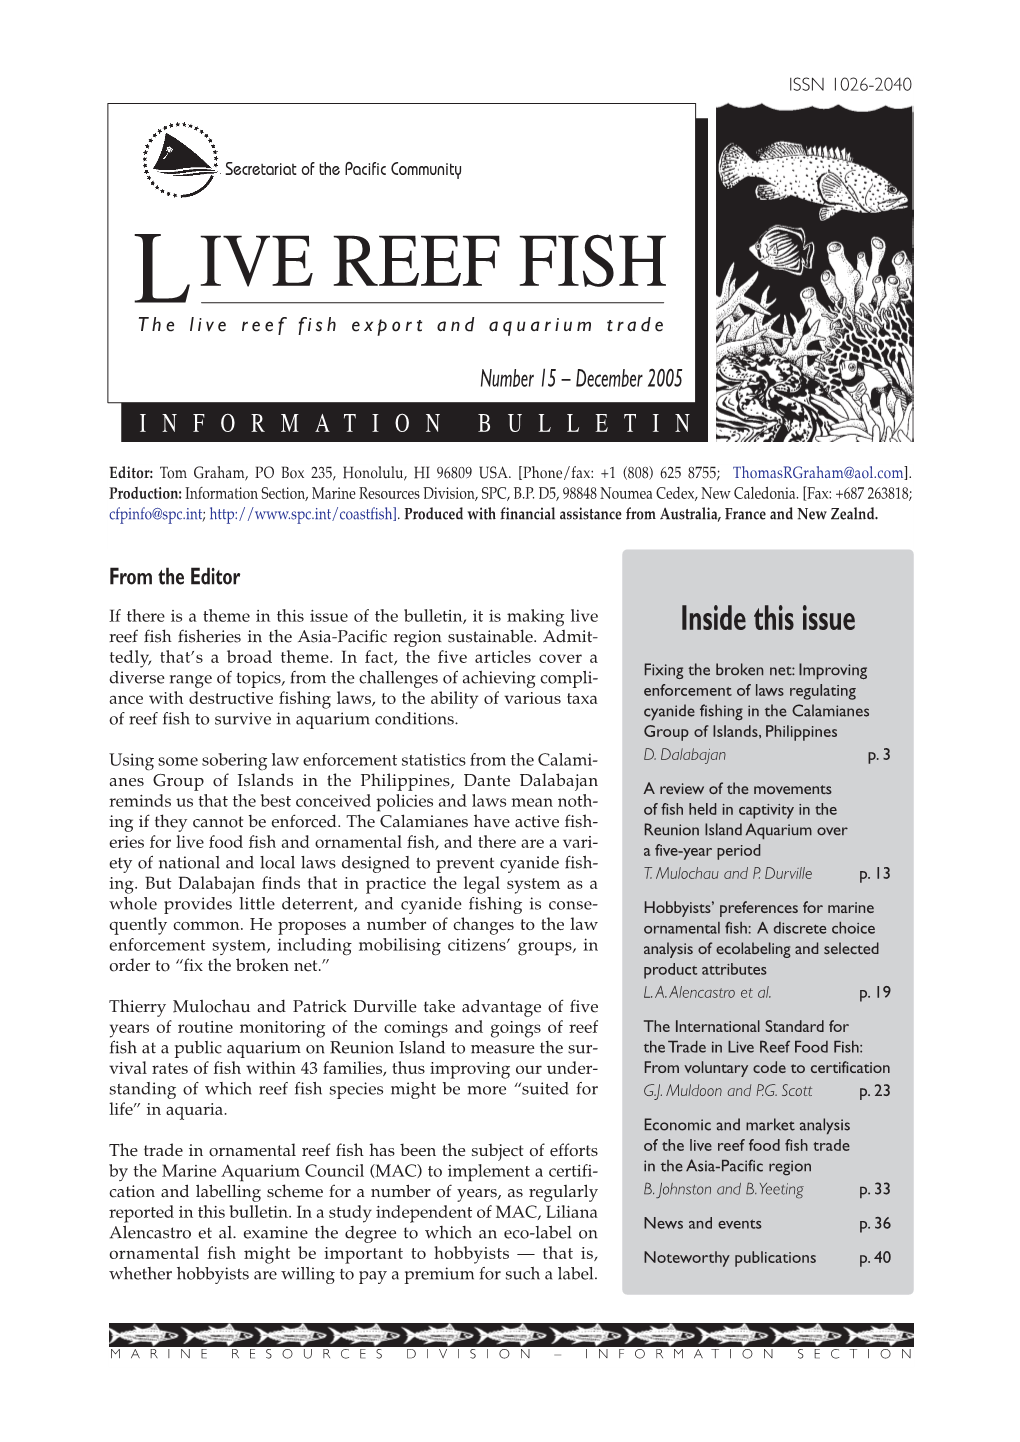 SPC Live Reef Fish Information Bulletin #15 – December 2005